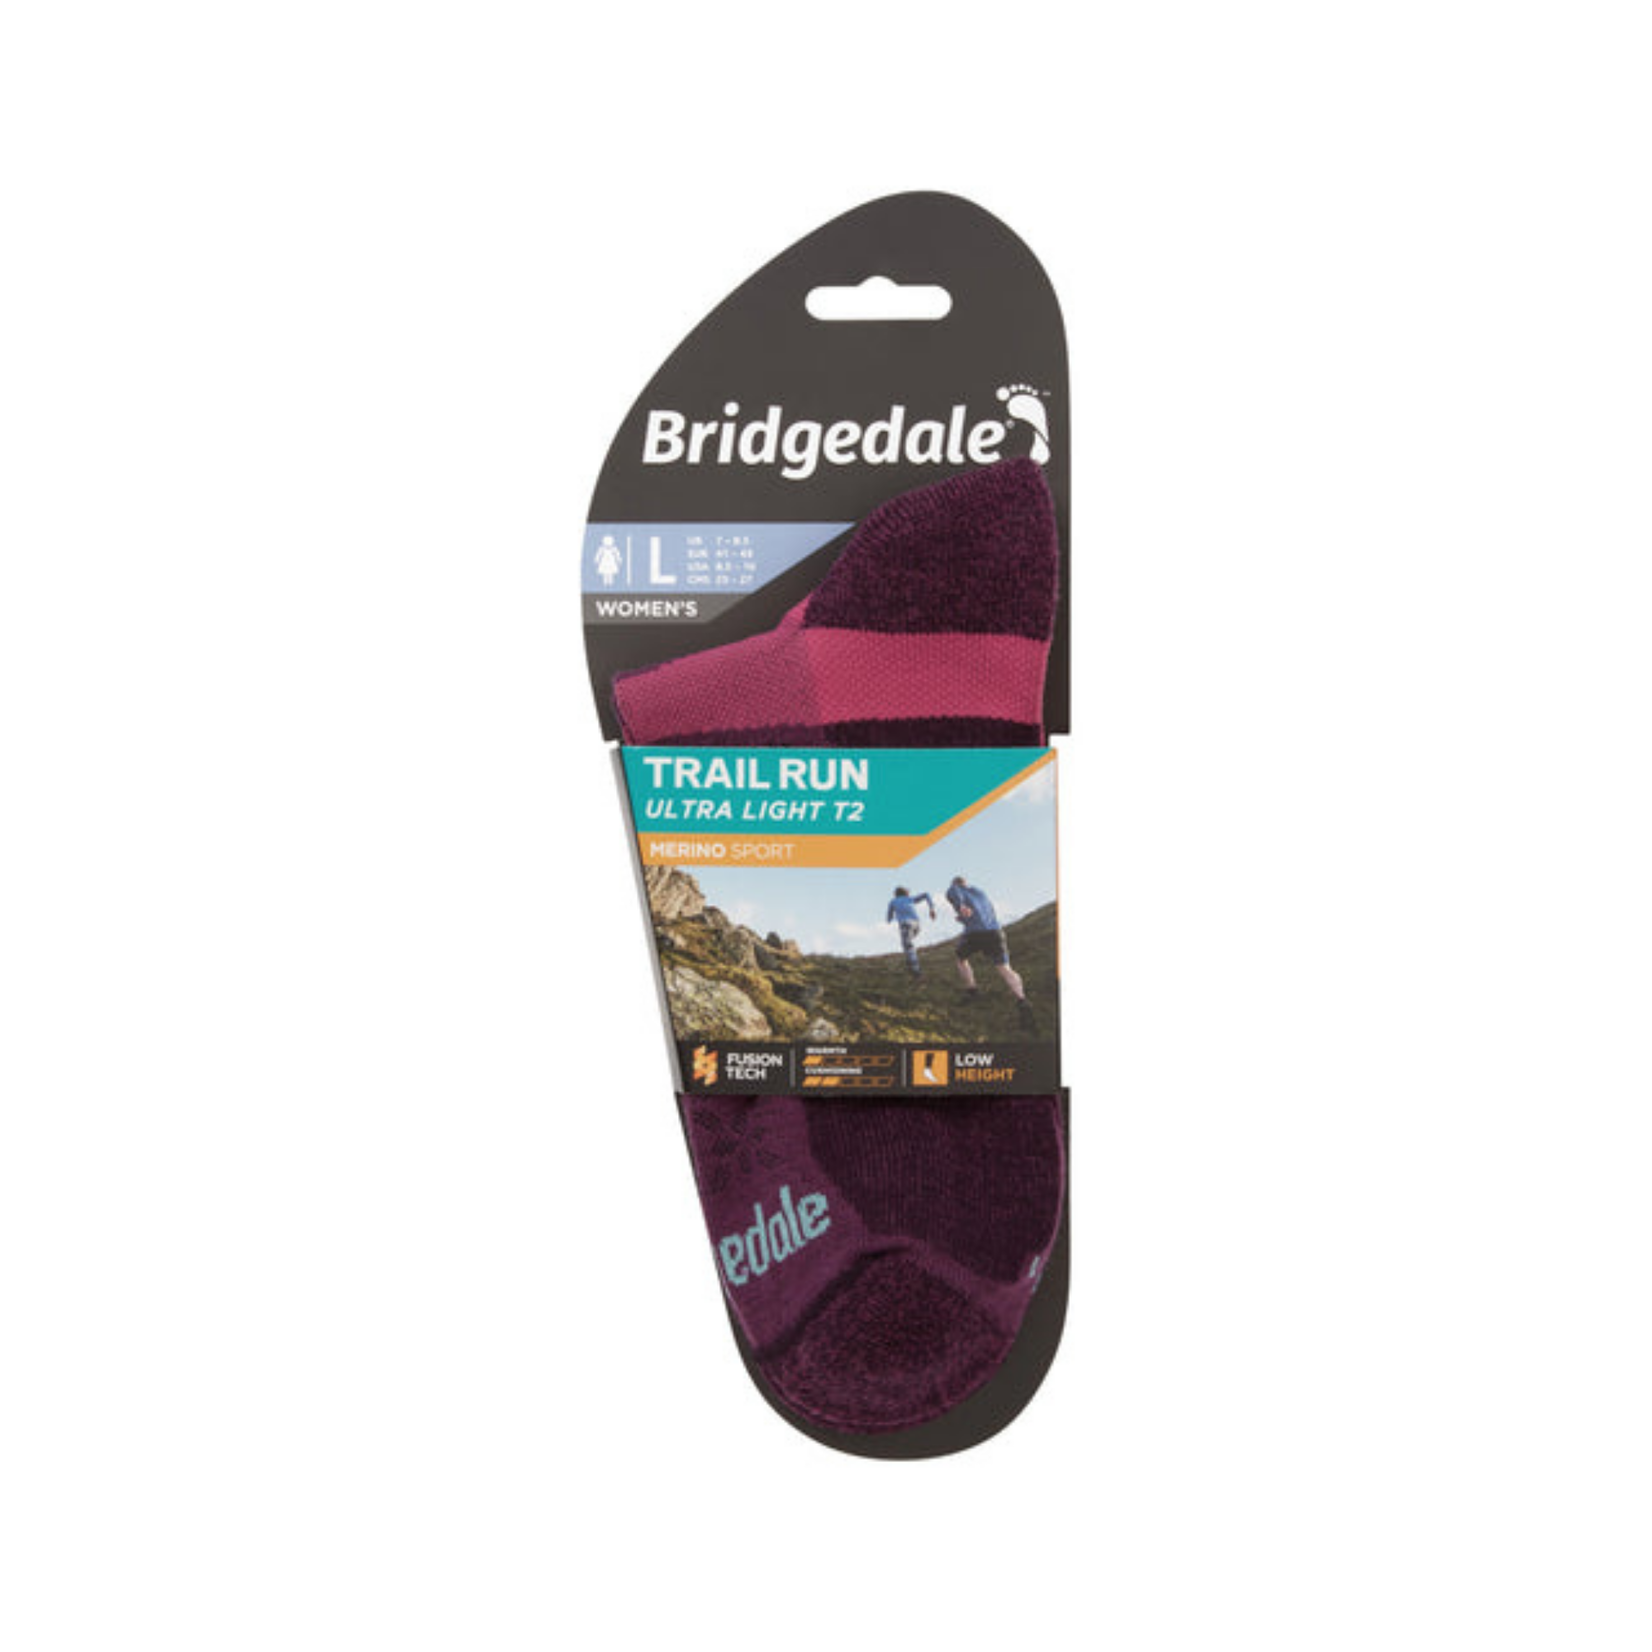 Bridgedale Socks Trail Run Ultralight Low Merino WMS Damson 710204 195